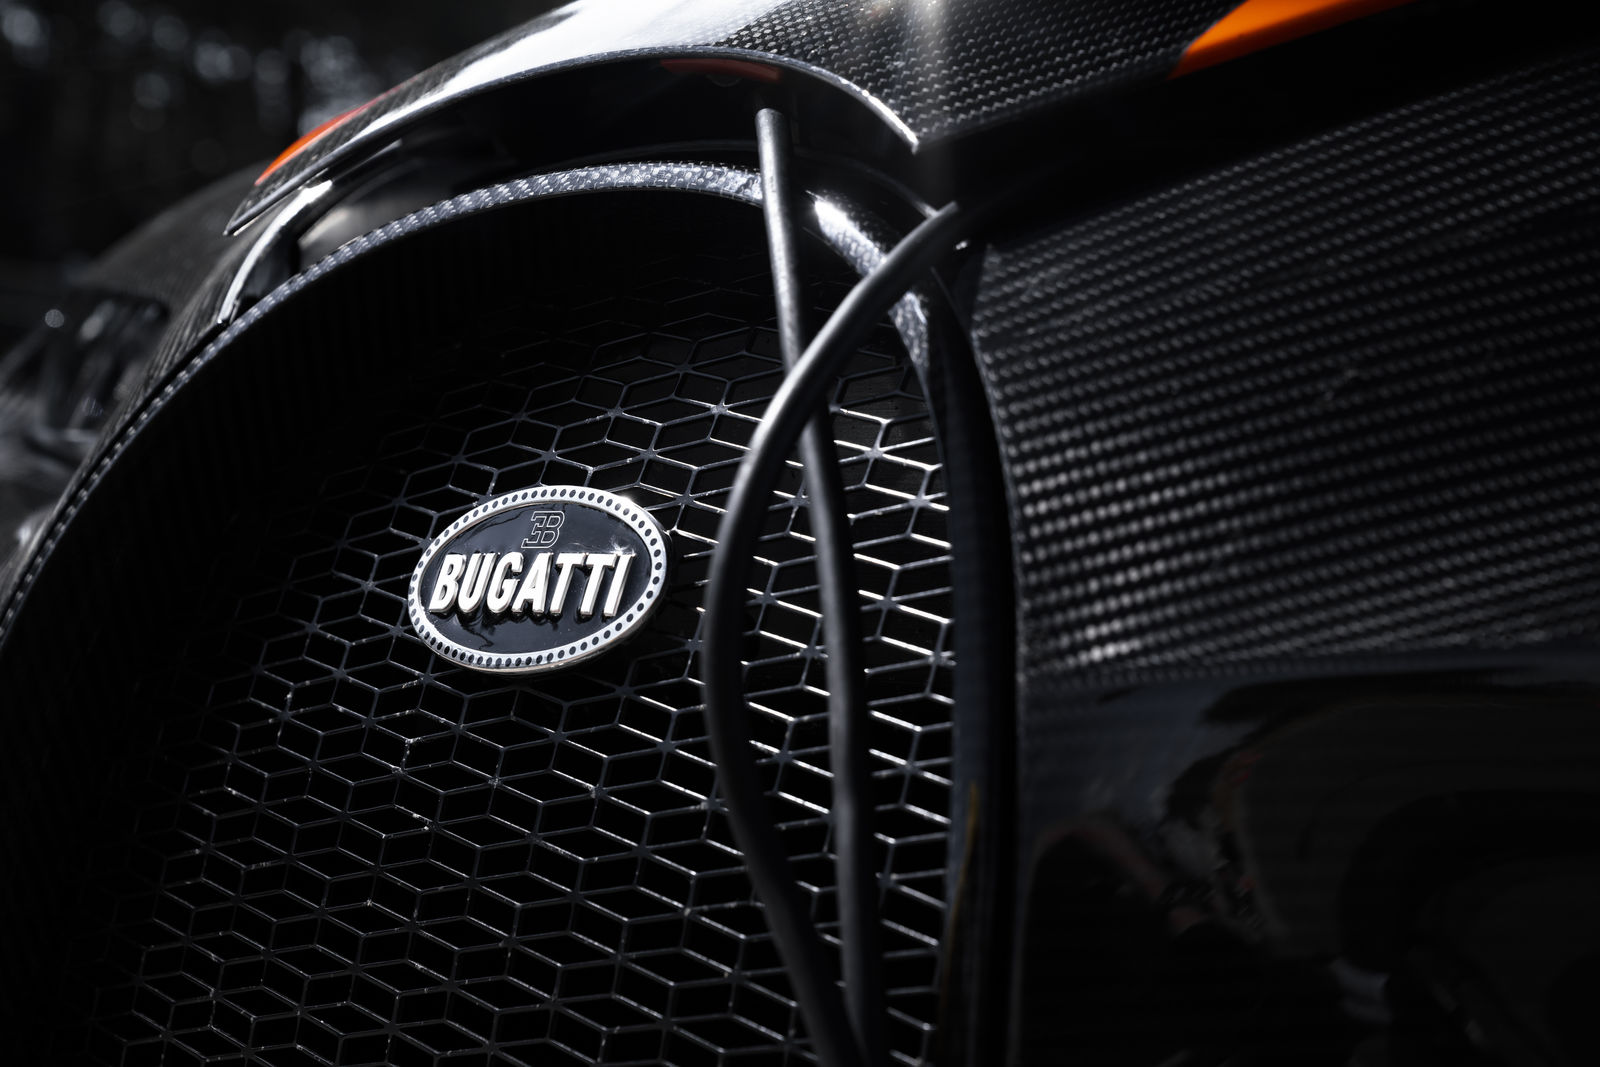 Bugatti Chiron 300 mph_2019 (11)